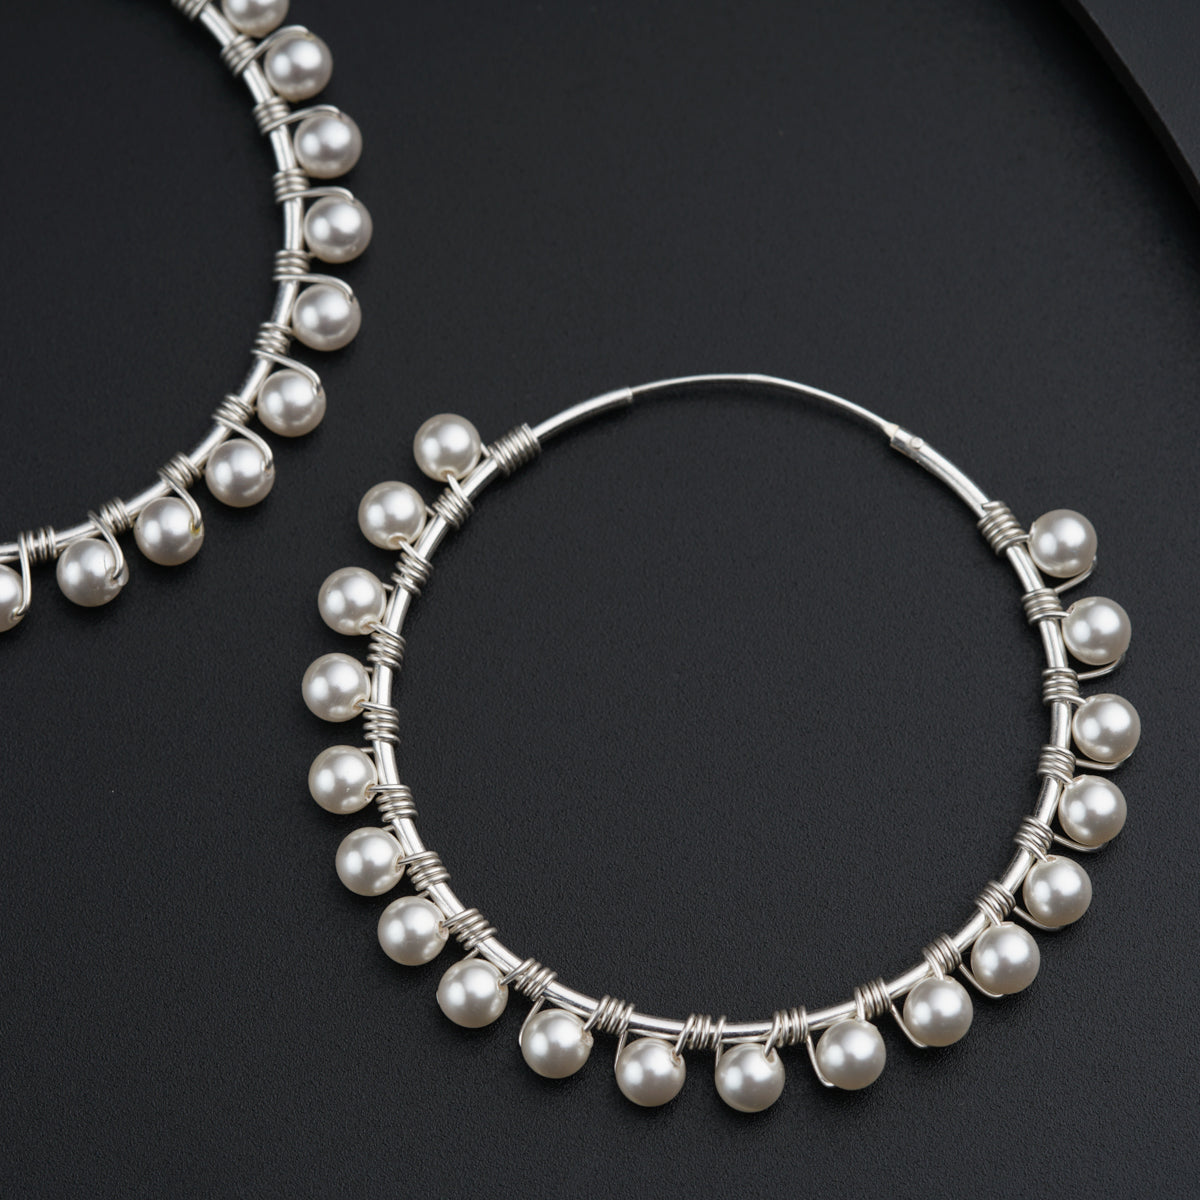 a pair of hoop earrings with white pearls